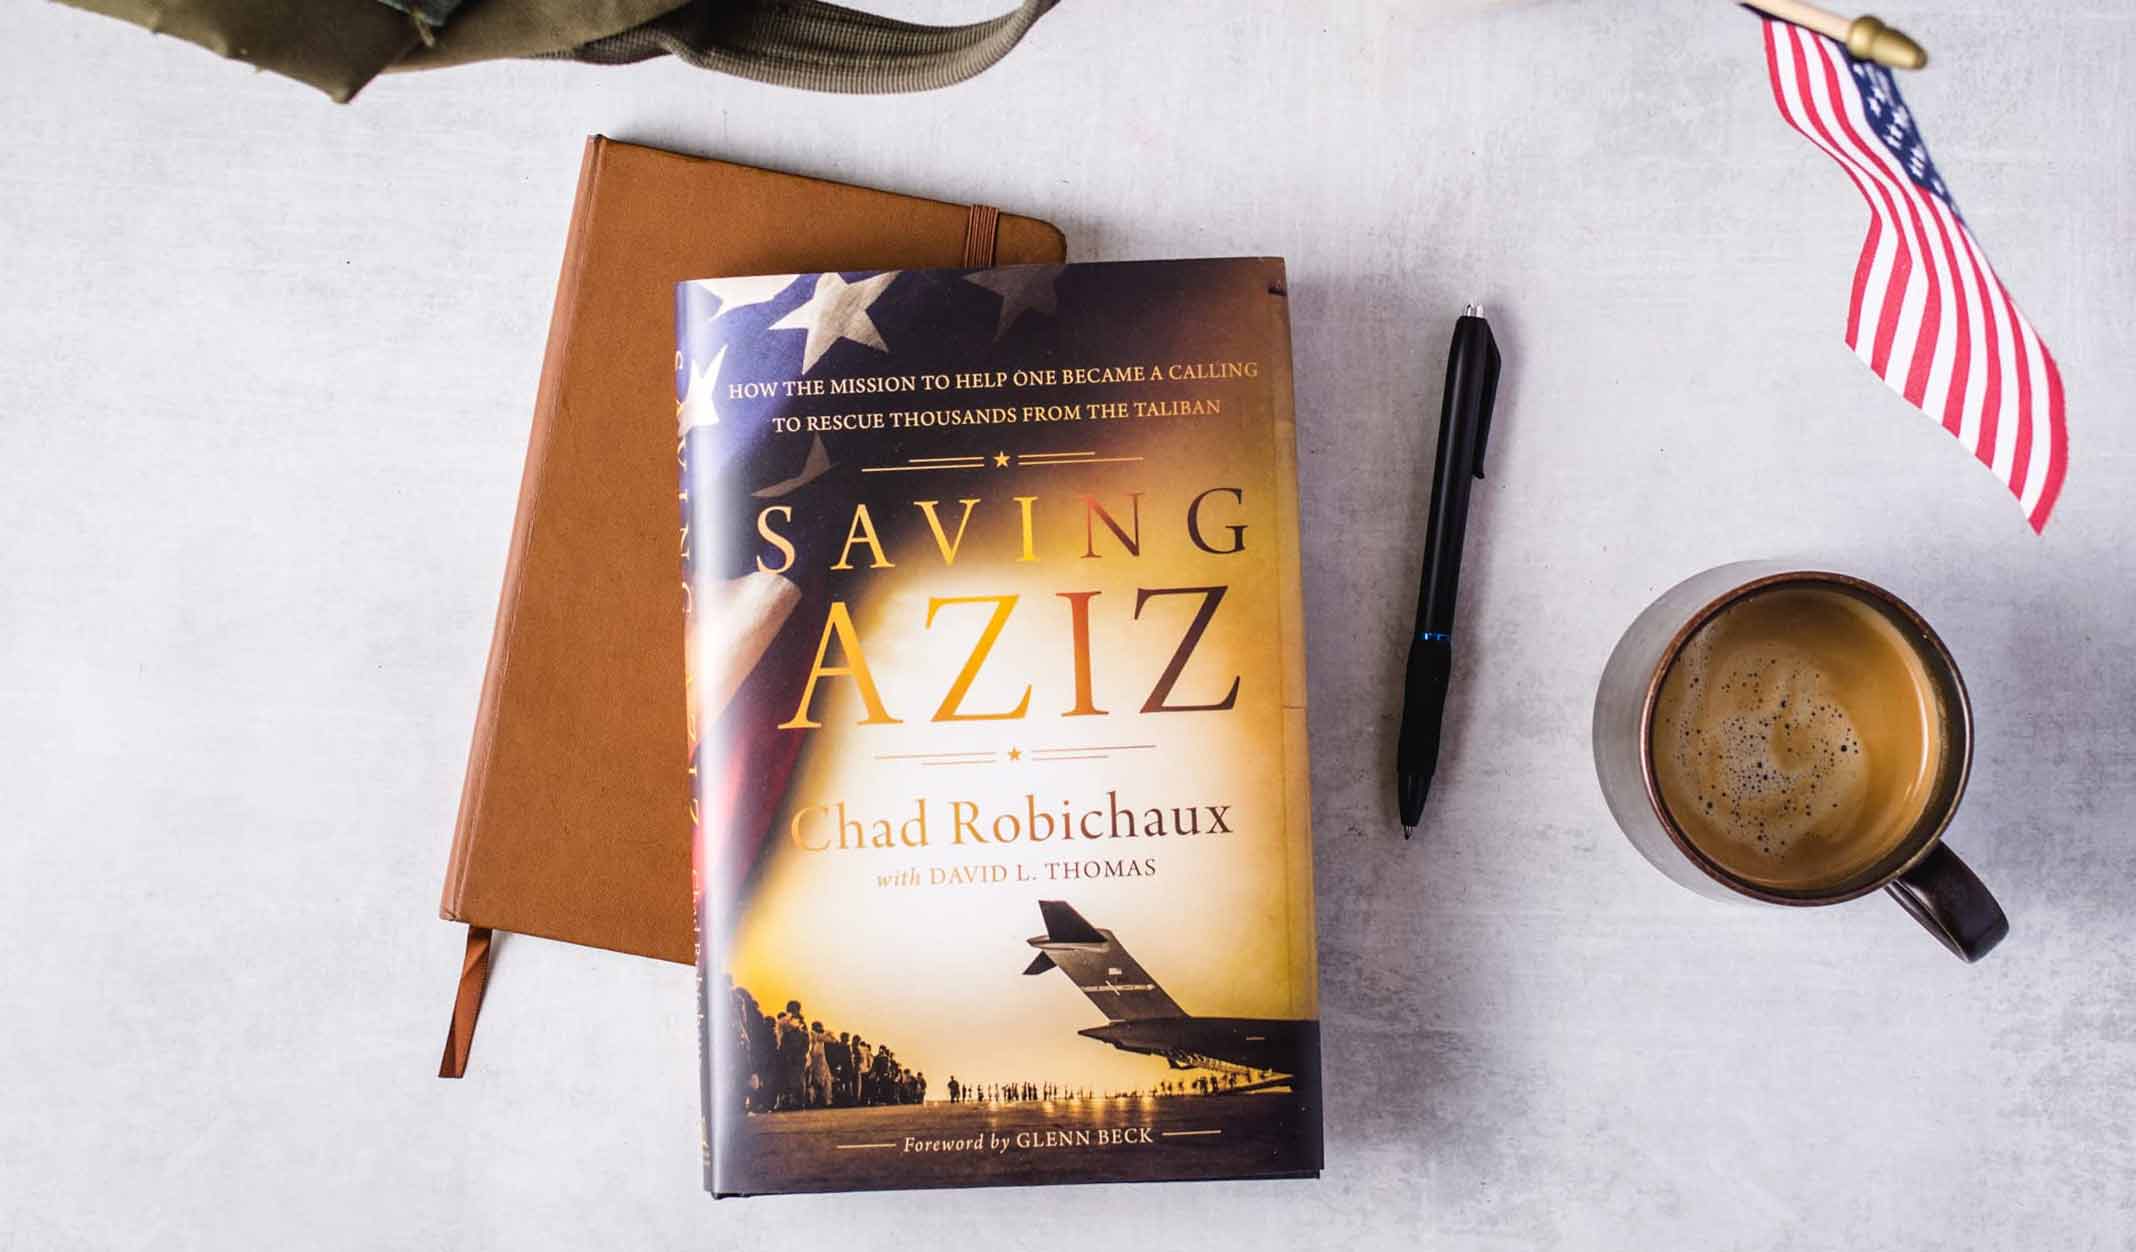 Get the Book: Saving Aziz